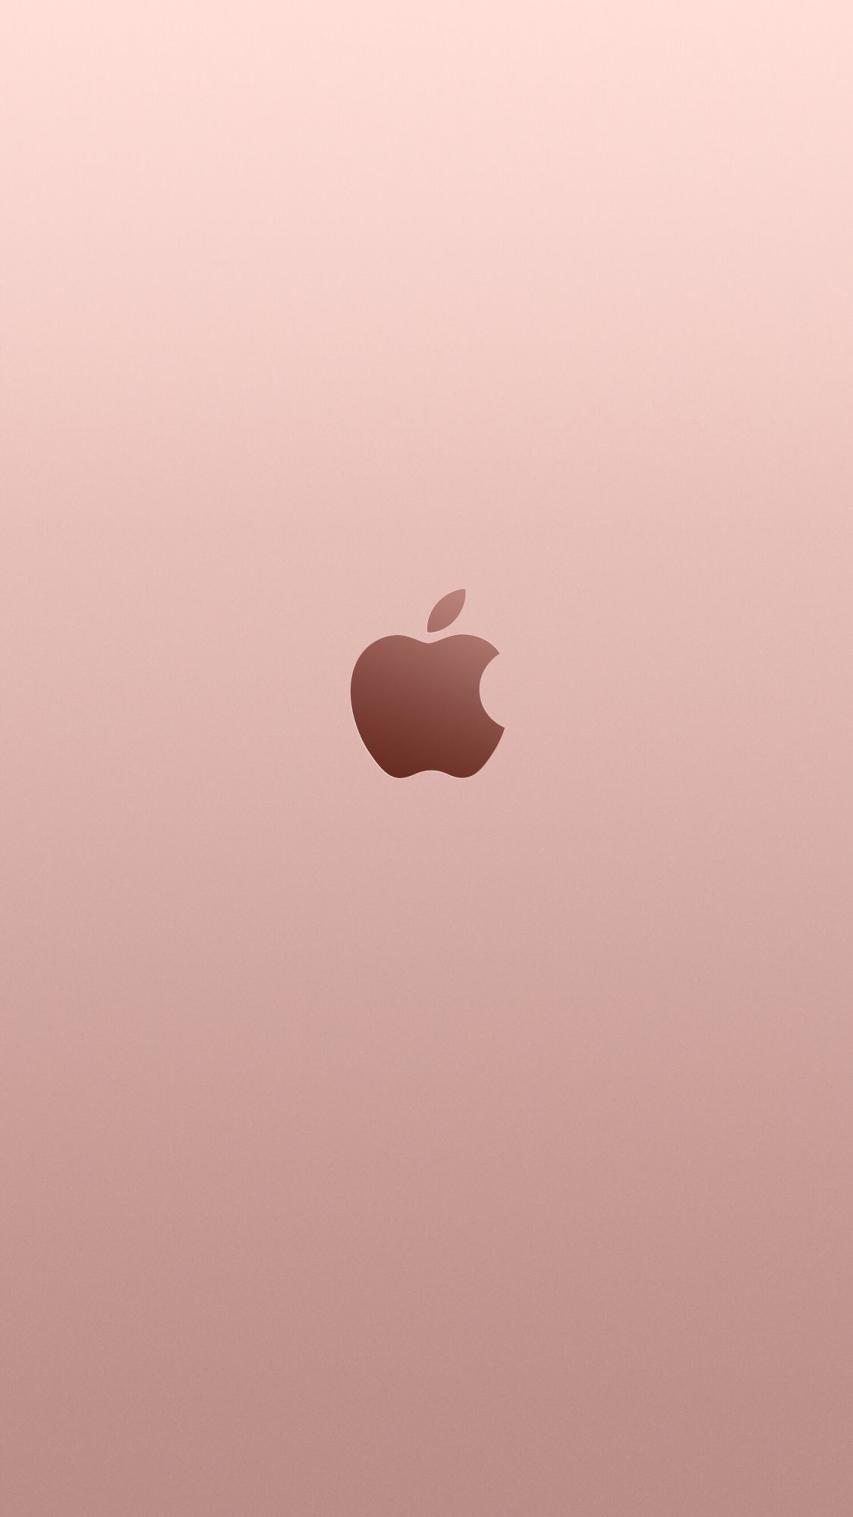 Apple logo iPhone 6s Plus Wallpapers